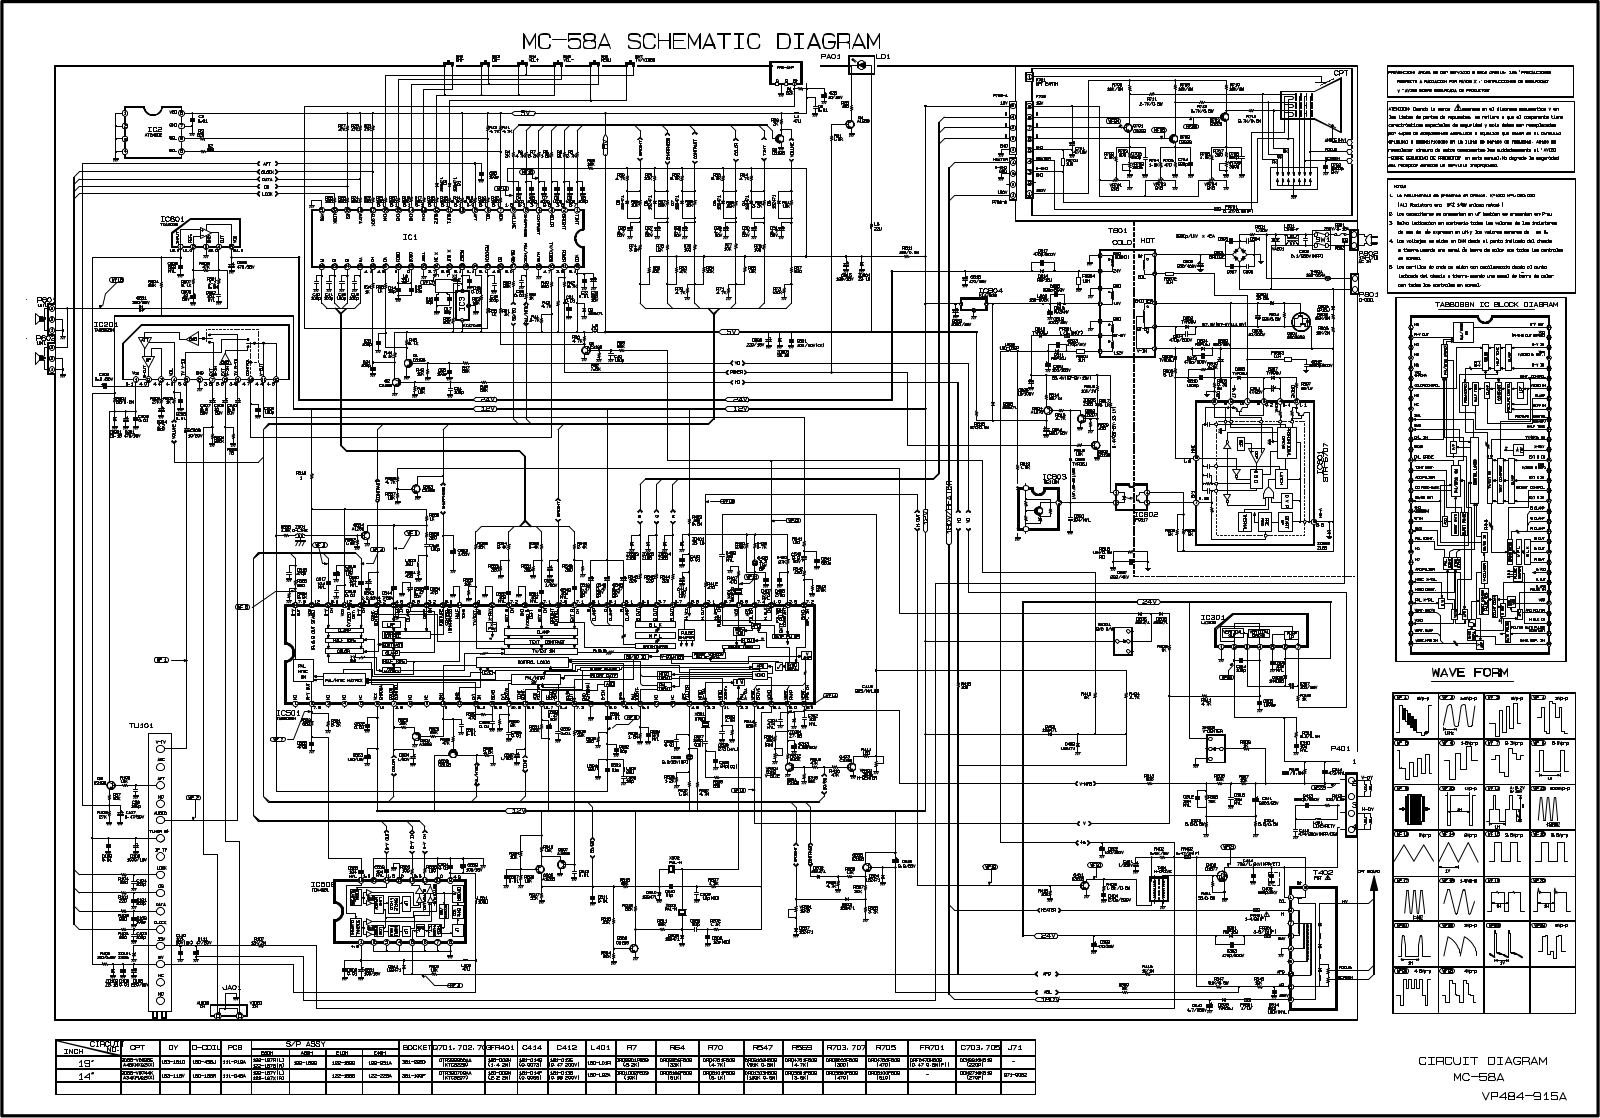 LG CP-20B84, CP-14B84, MC-58A Schematic